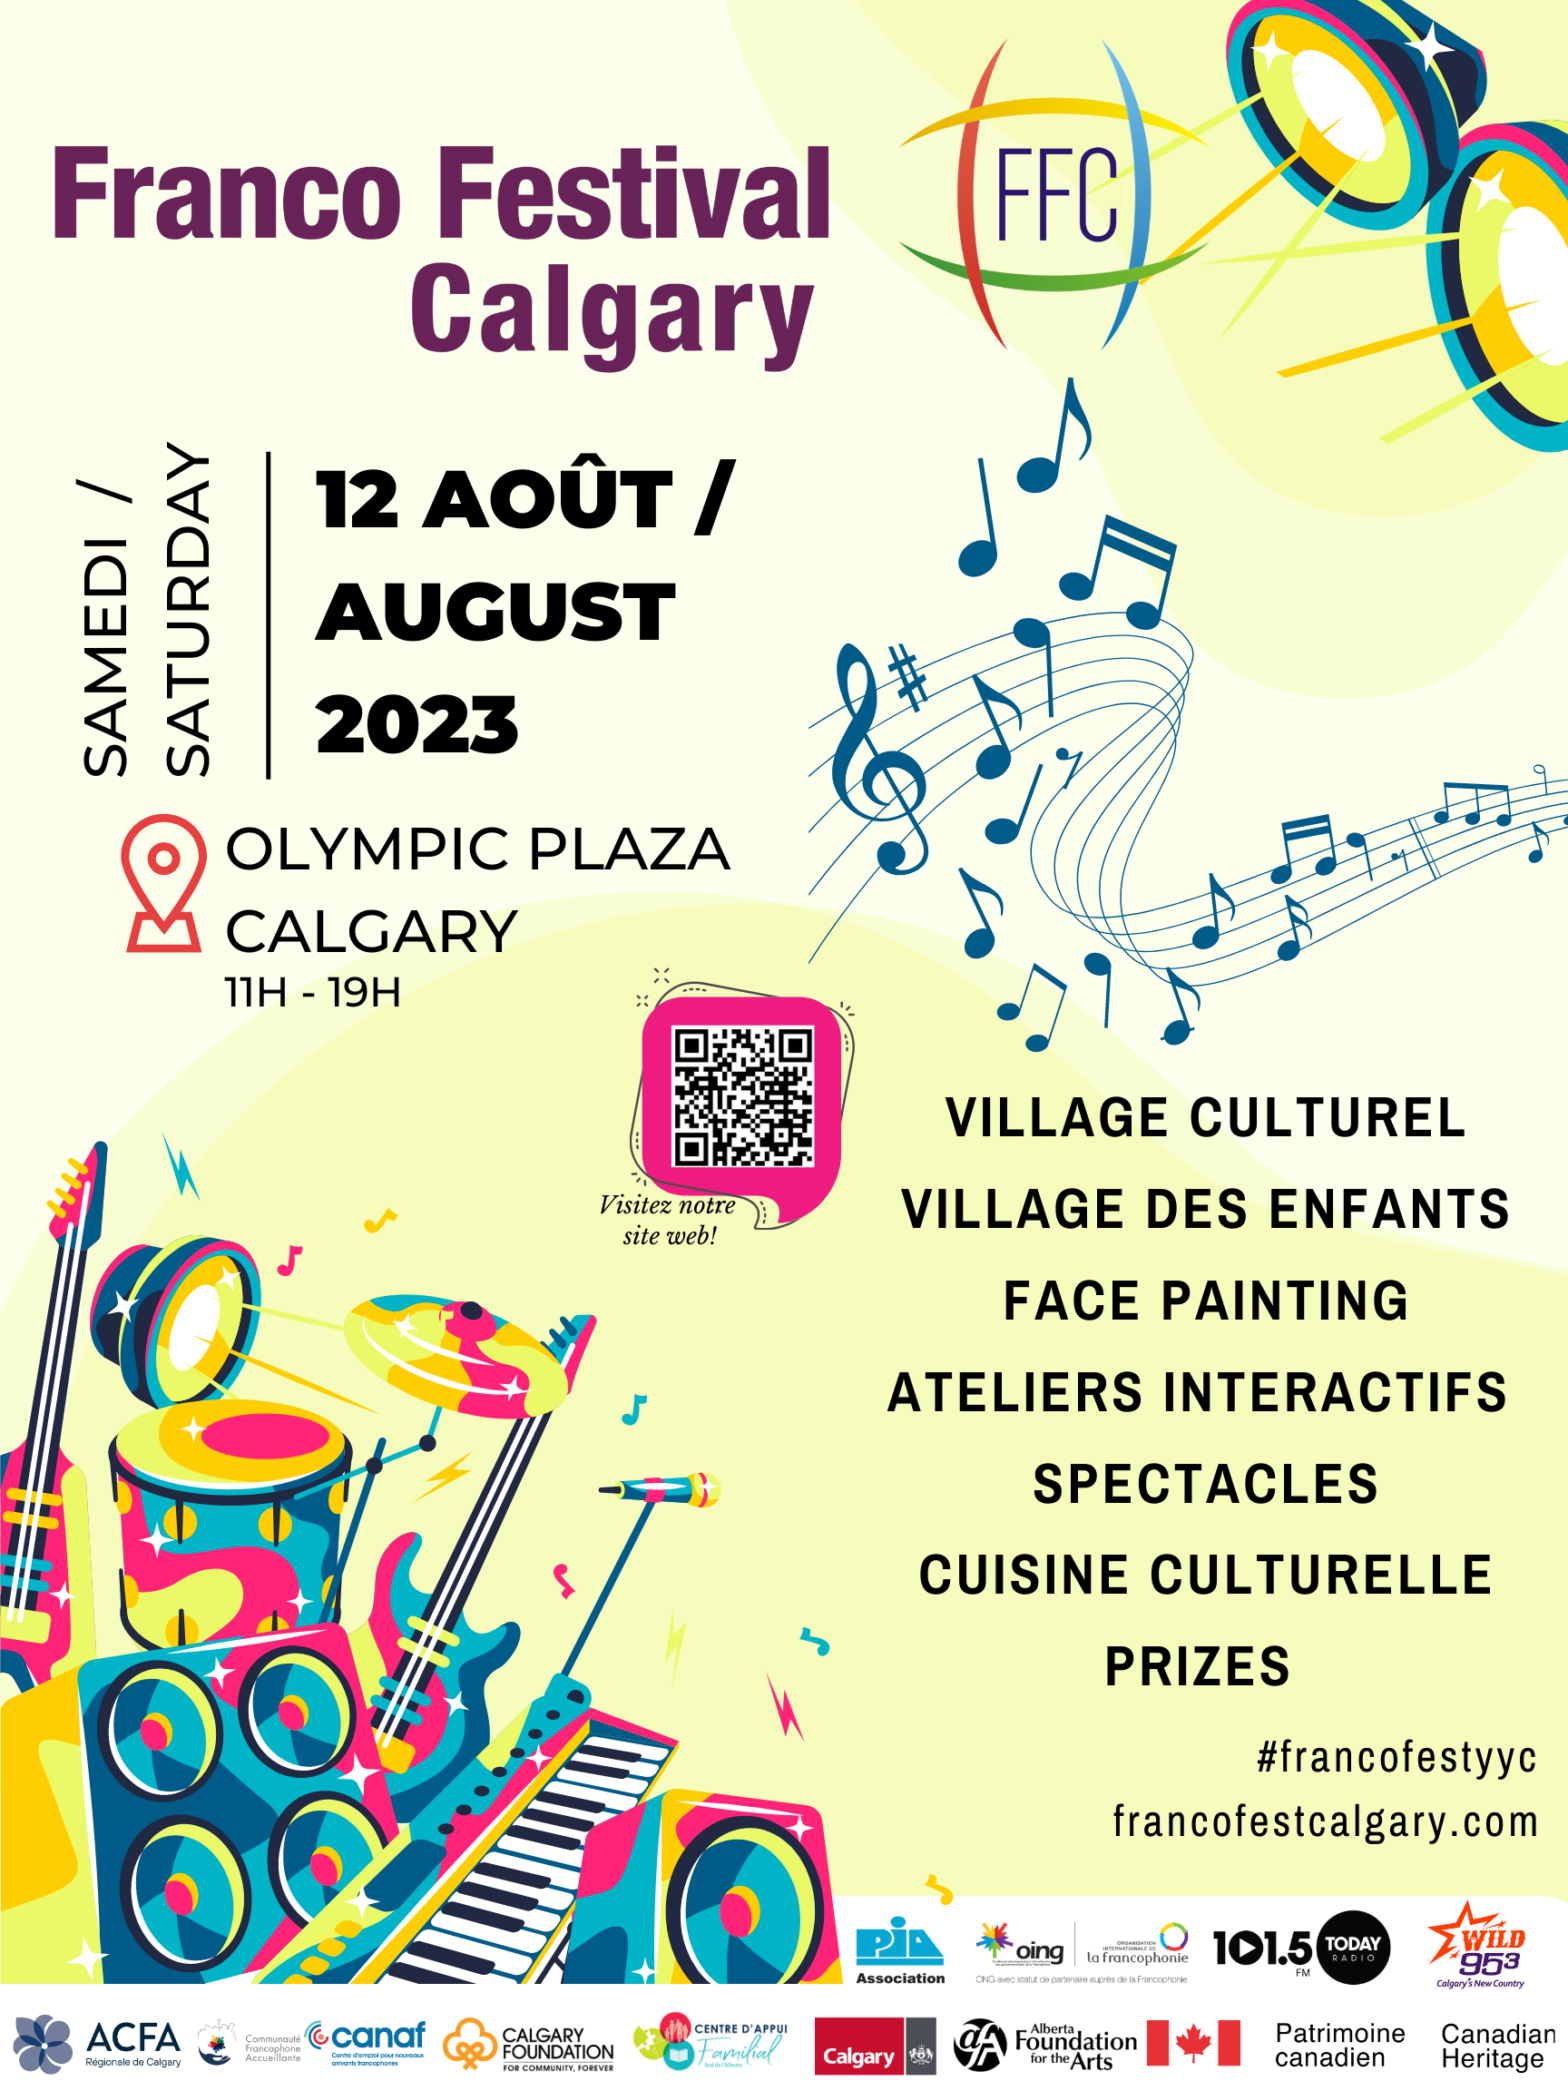 Franco Festival Calgary 2023